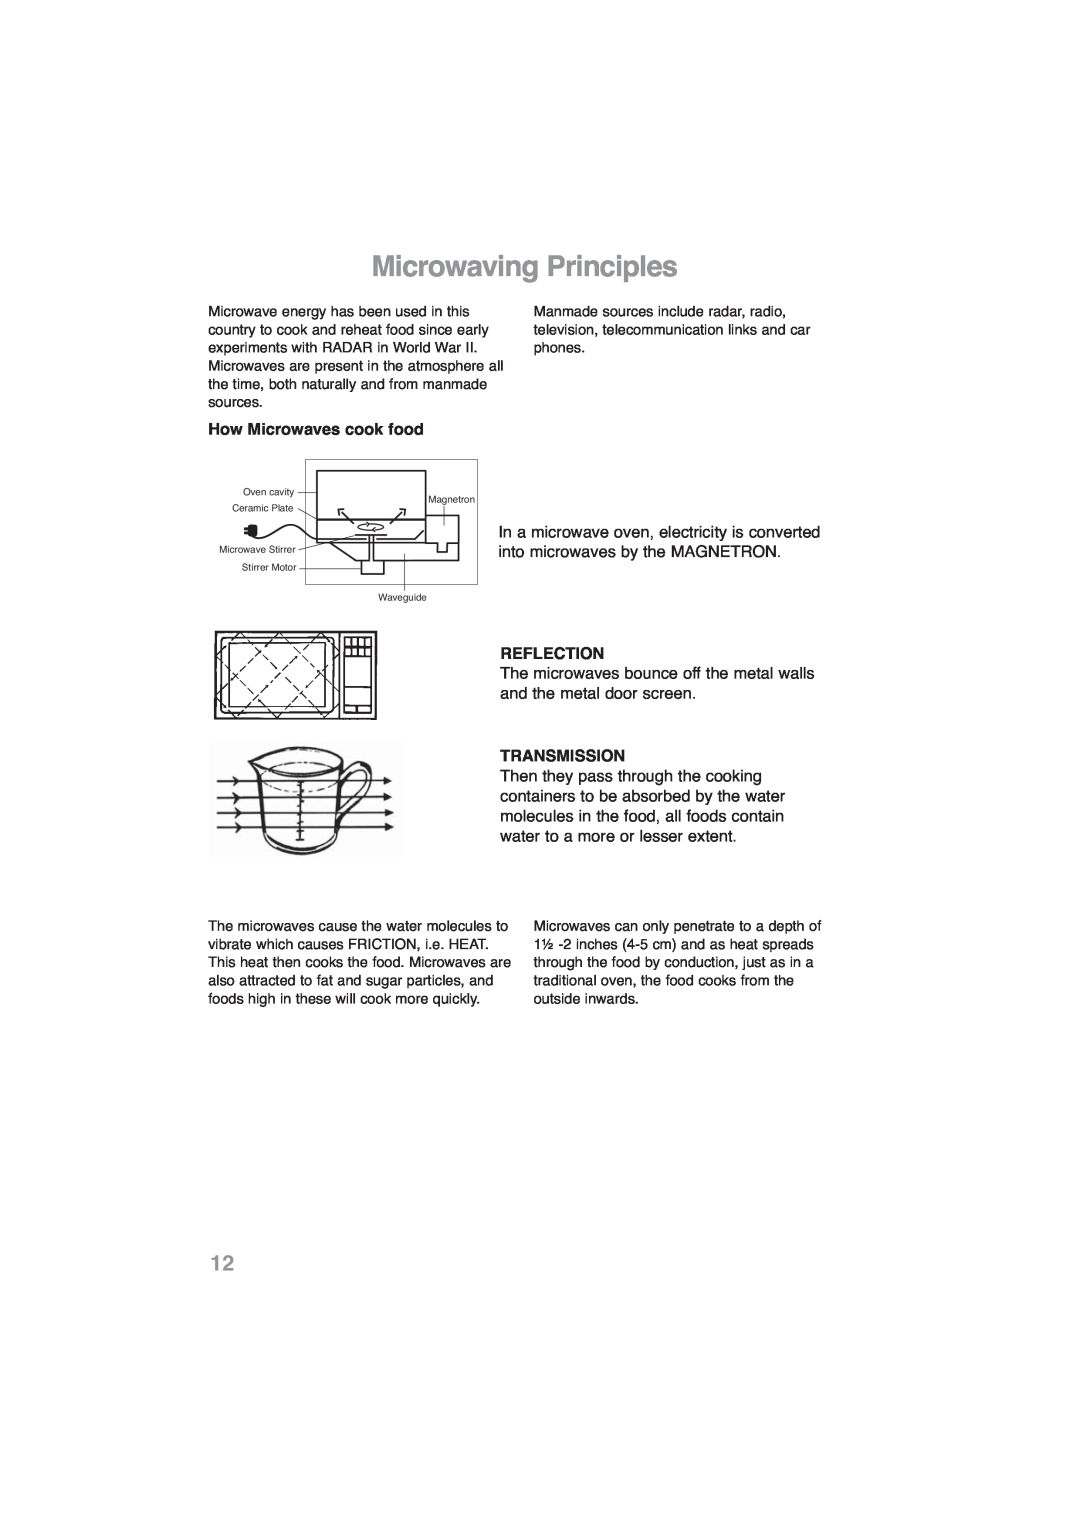 Panasonic NN-CF768M, NN-CF778S Microwaving Principles, How Microwaves cook food, Reflection, Transmission 